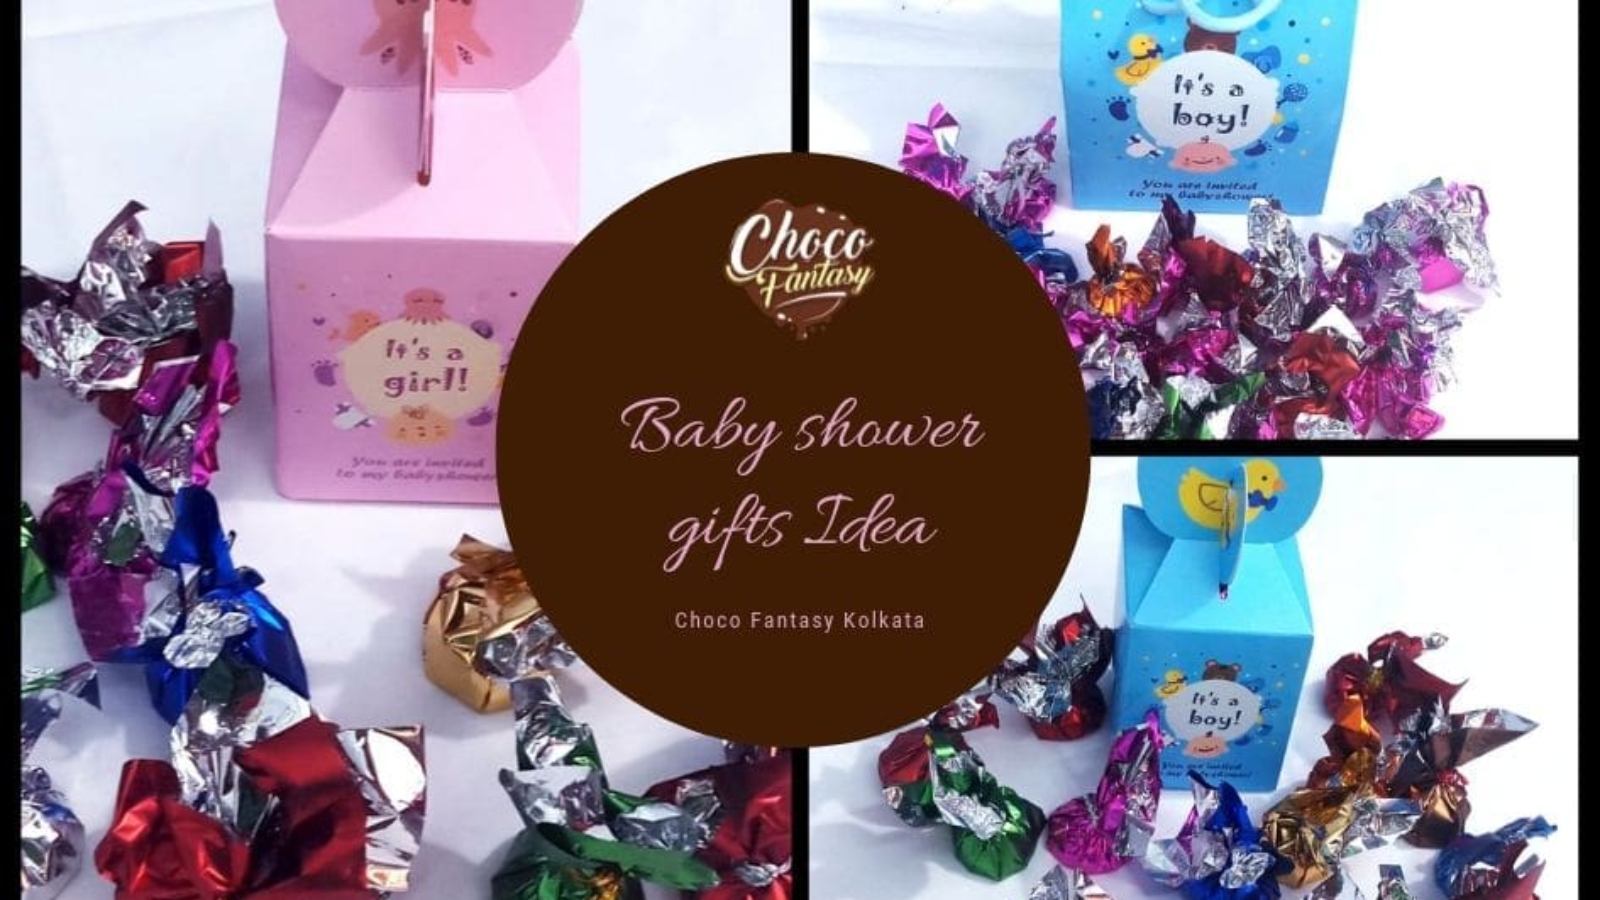 Baby shower gifts ideas in Kolkata, choco fantasy kolkata